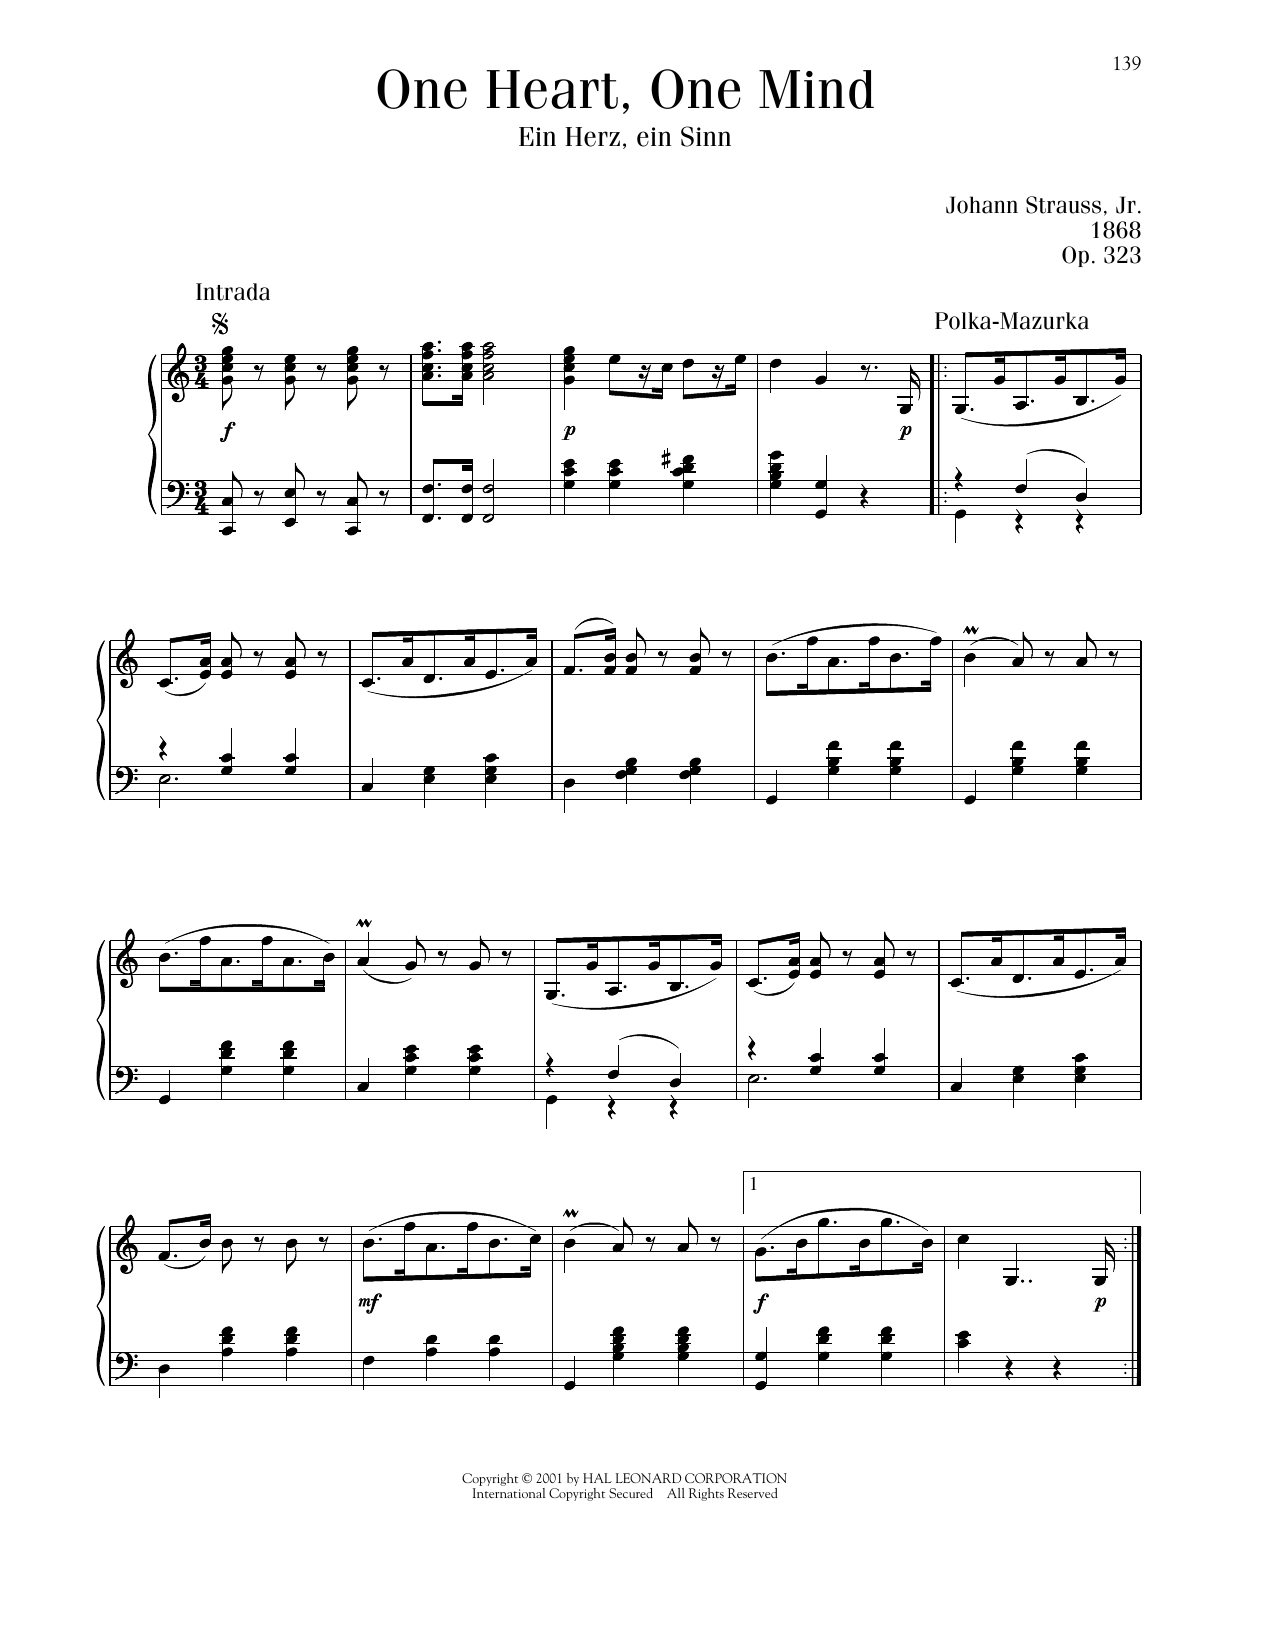 Johann Strauss One Heart, One Mind, Op. 323 sheet music notes printable PDF score